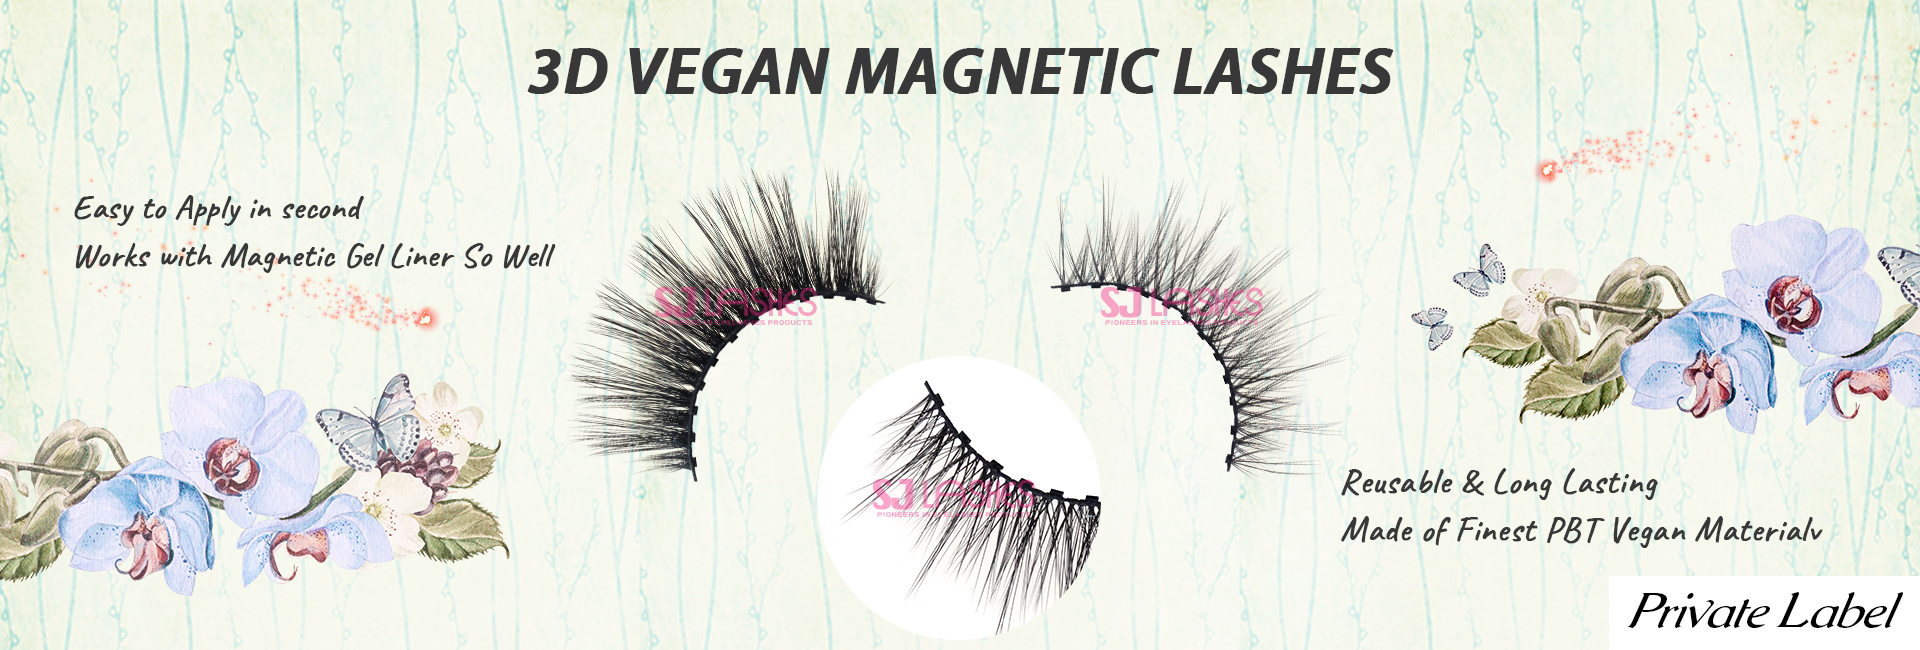 3D Vegan Magnetic Lashes